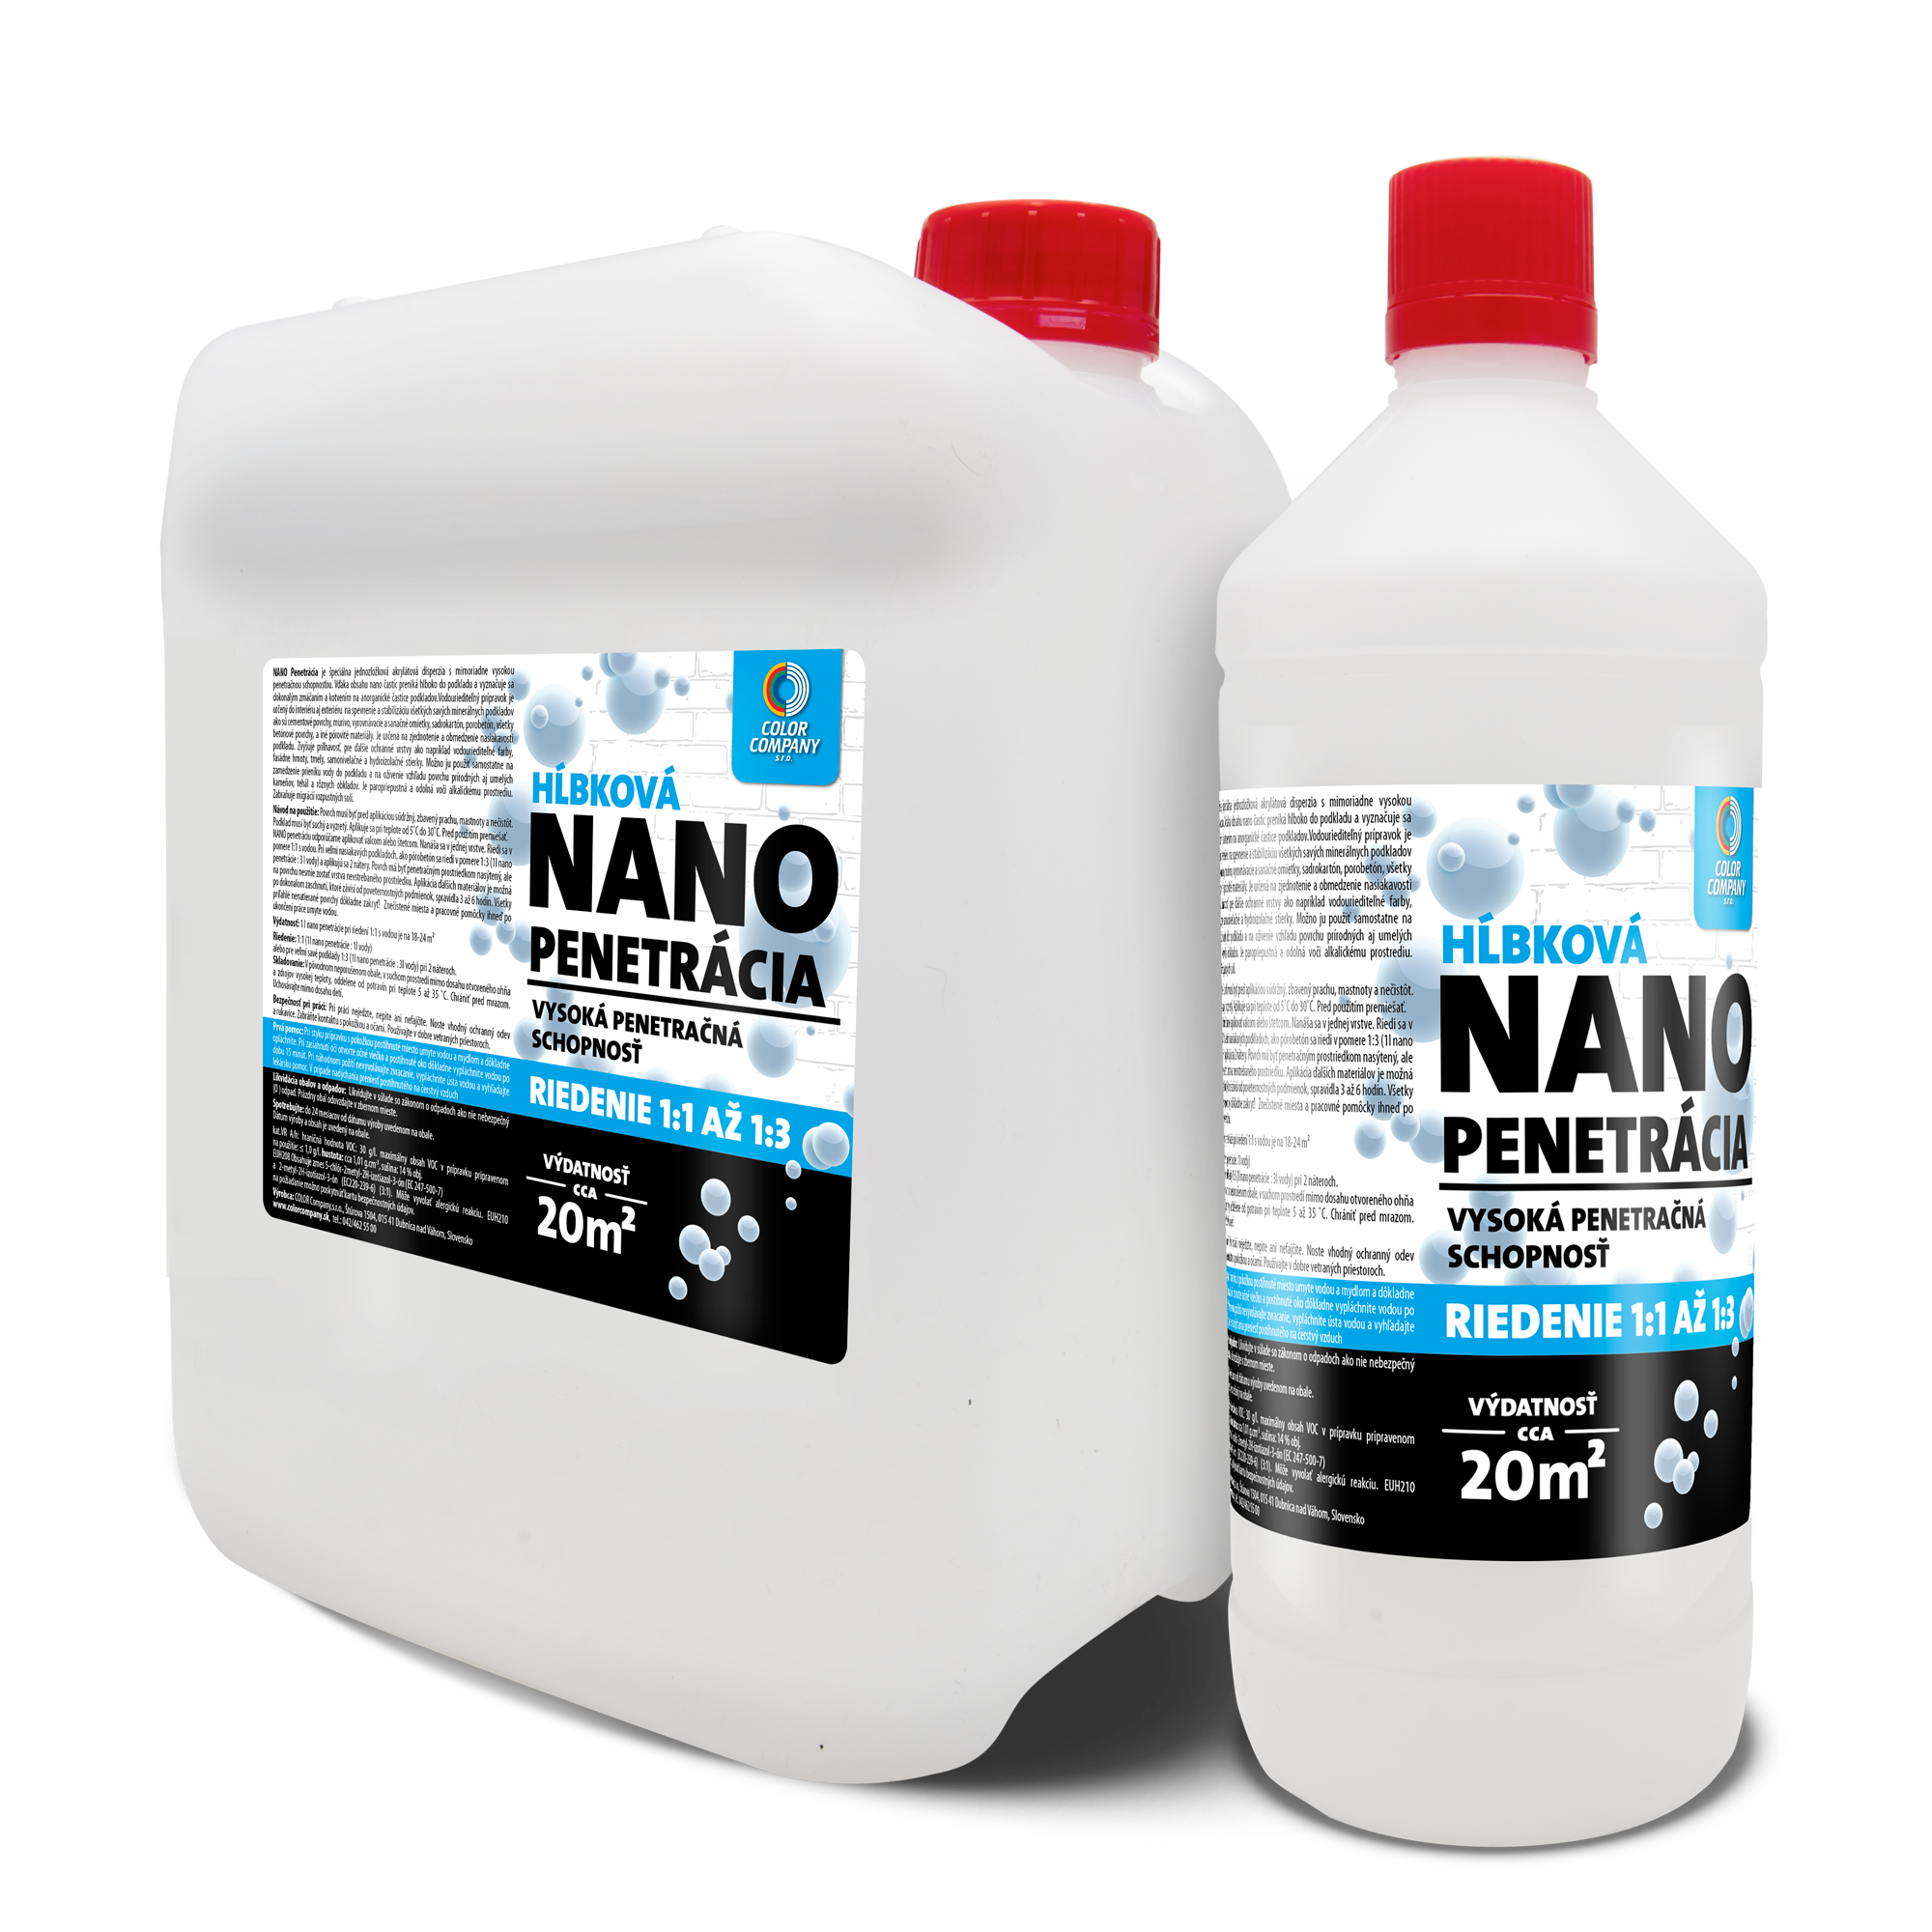 COLOR COMPANY Nano penetrácia 5L